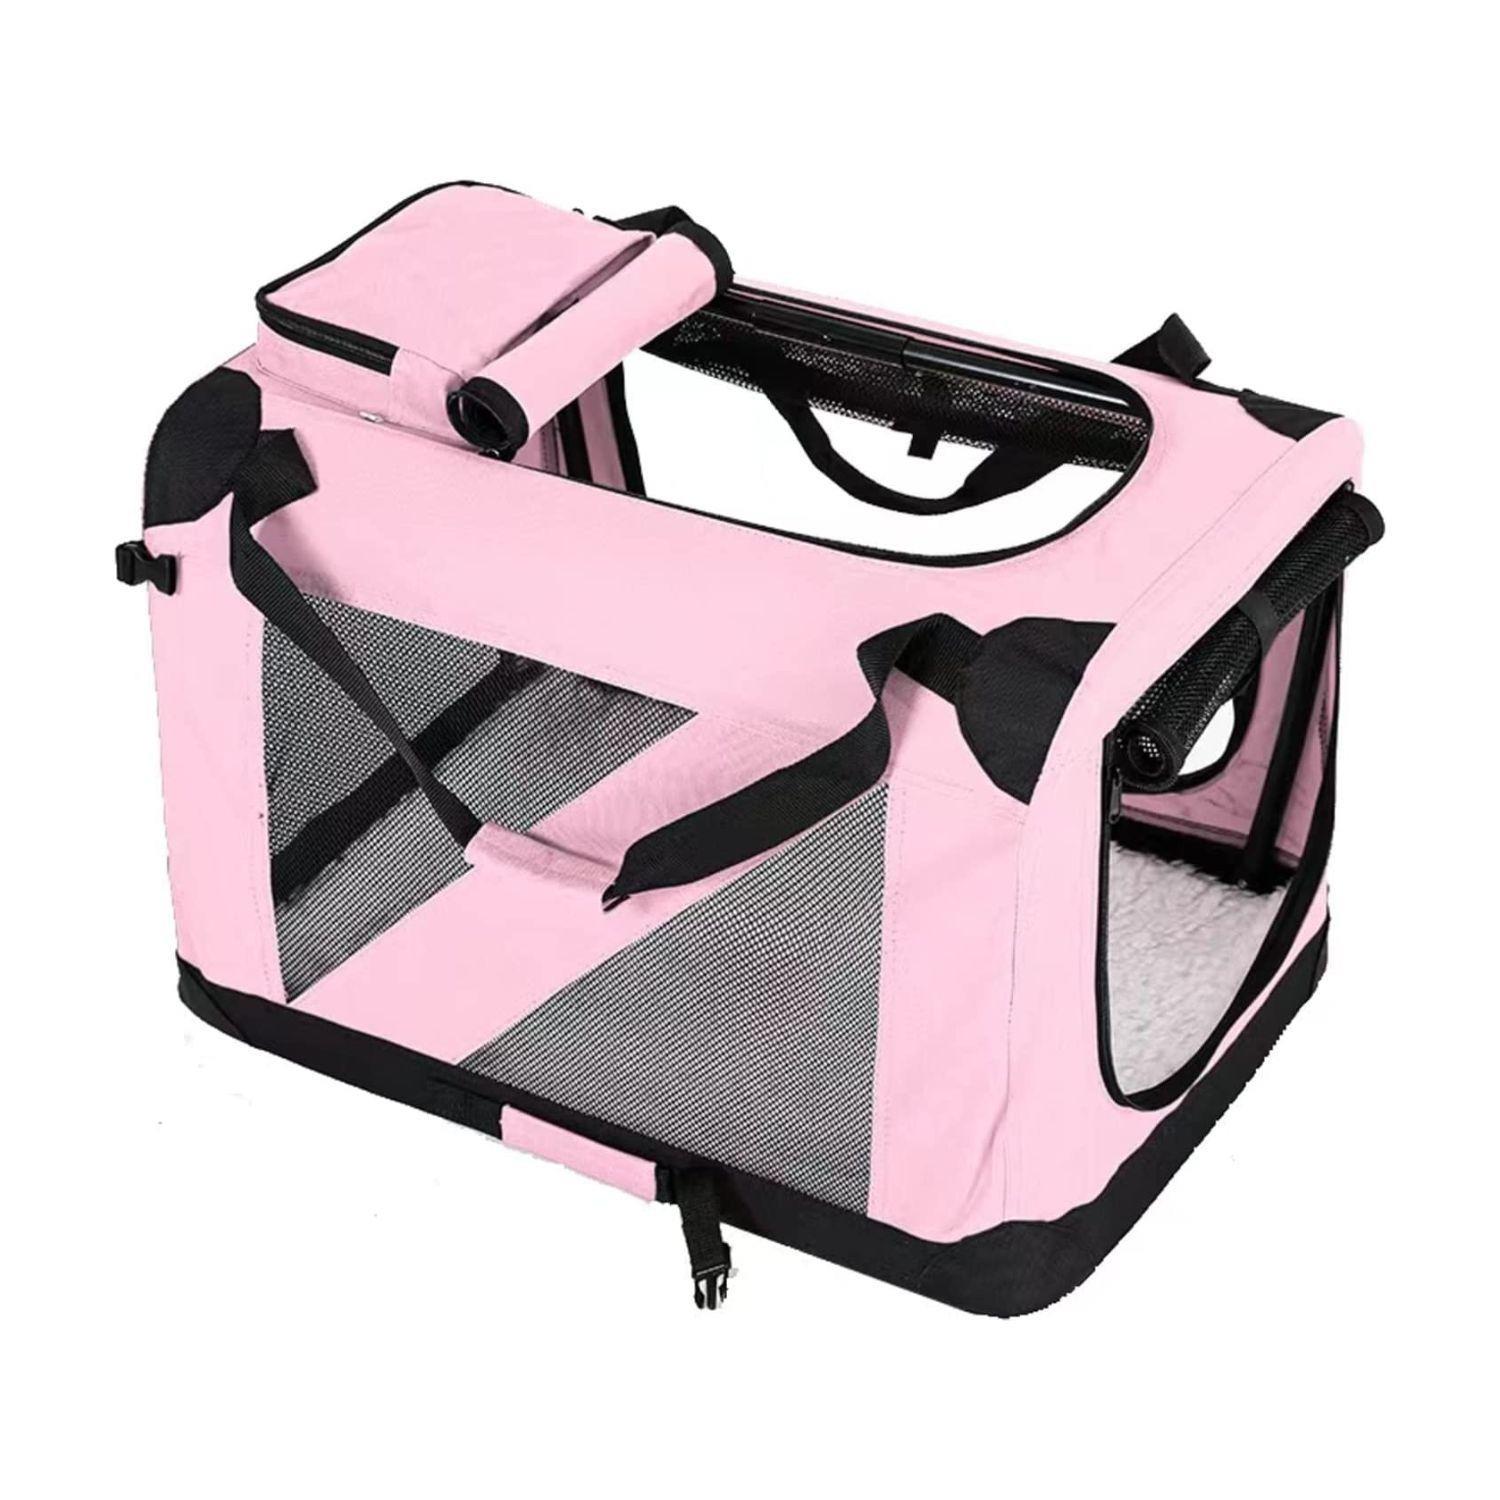 FLOOFI Portable Pet Carrier XL Size (Extra Large, Pink)